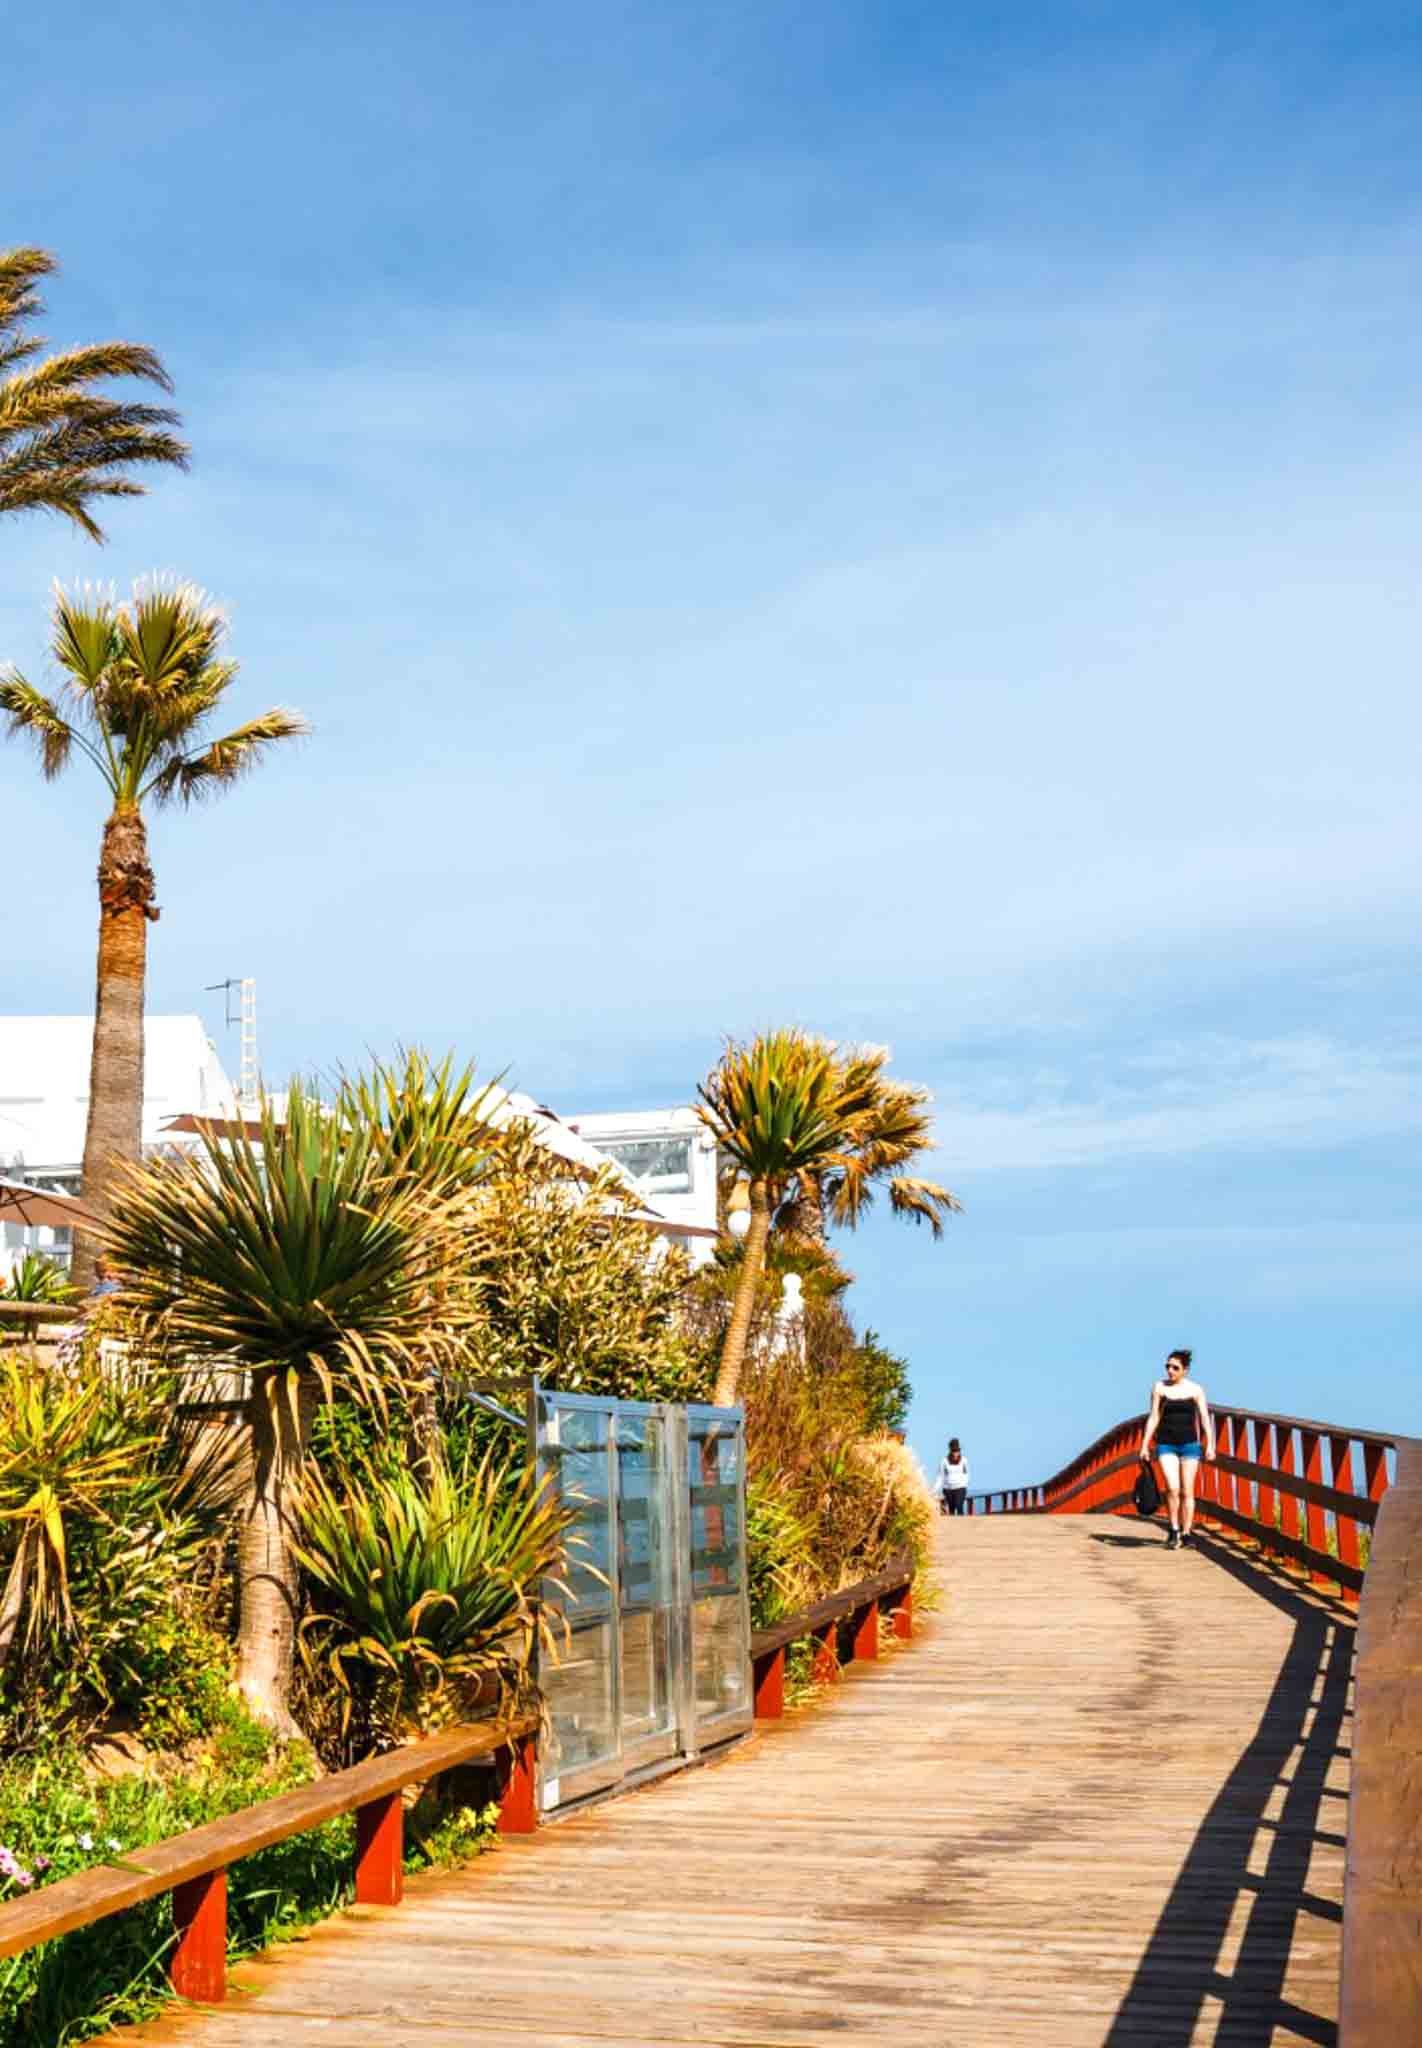 La Cala de Mijas Coast - The Best Beach Towns in Southern Spain - Stunning Beach Towns in Spain - The Wildest Road Blog.jpg